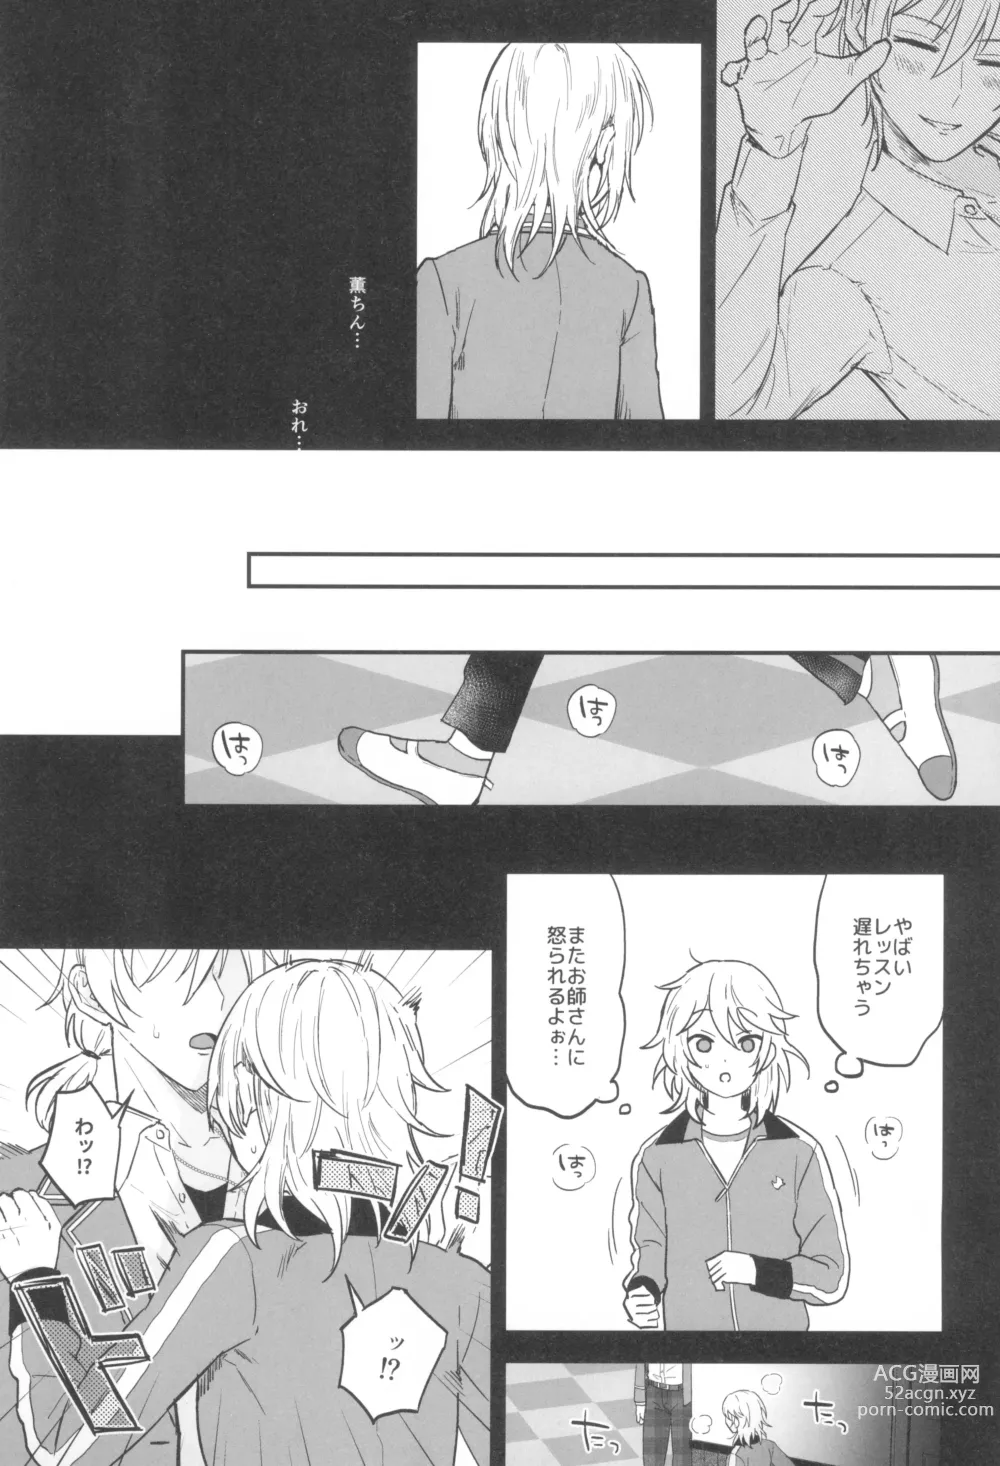 Page 21 of doujinshi Kore made mo korekara mo